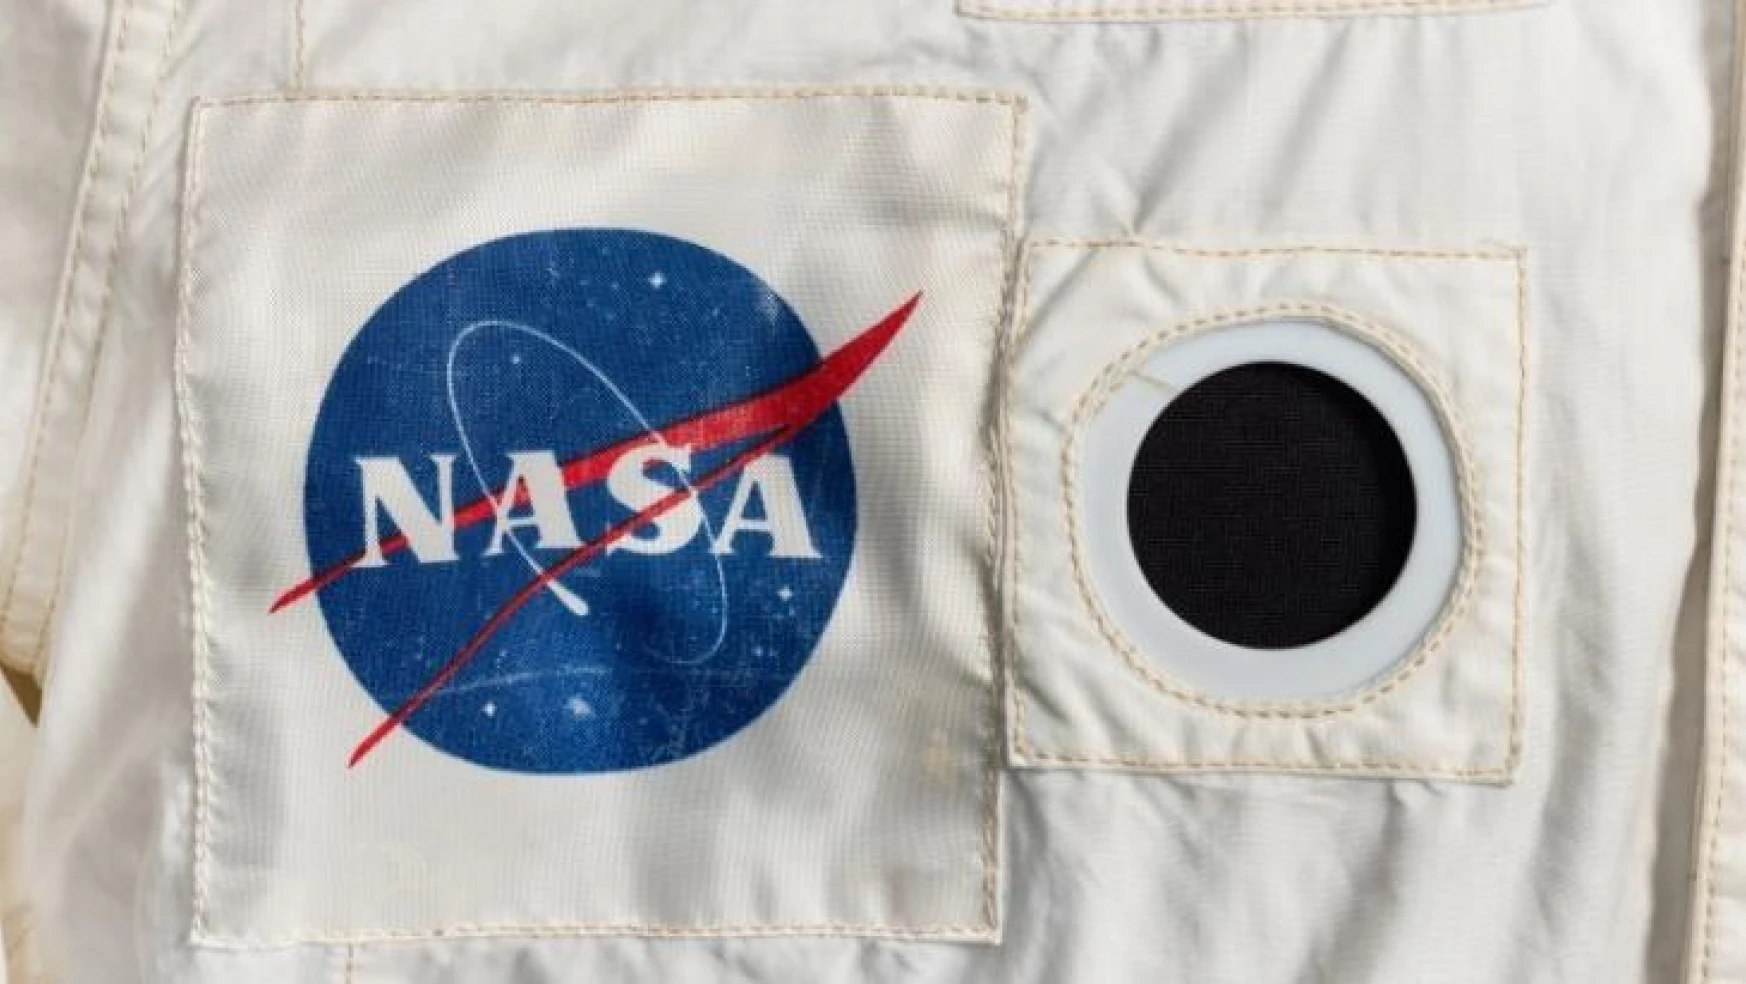 Ay'a ayak basan ikinci astronotun ceketi 2.8 milyon dolara satıldı